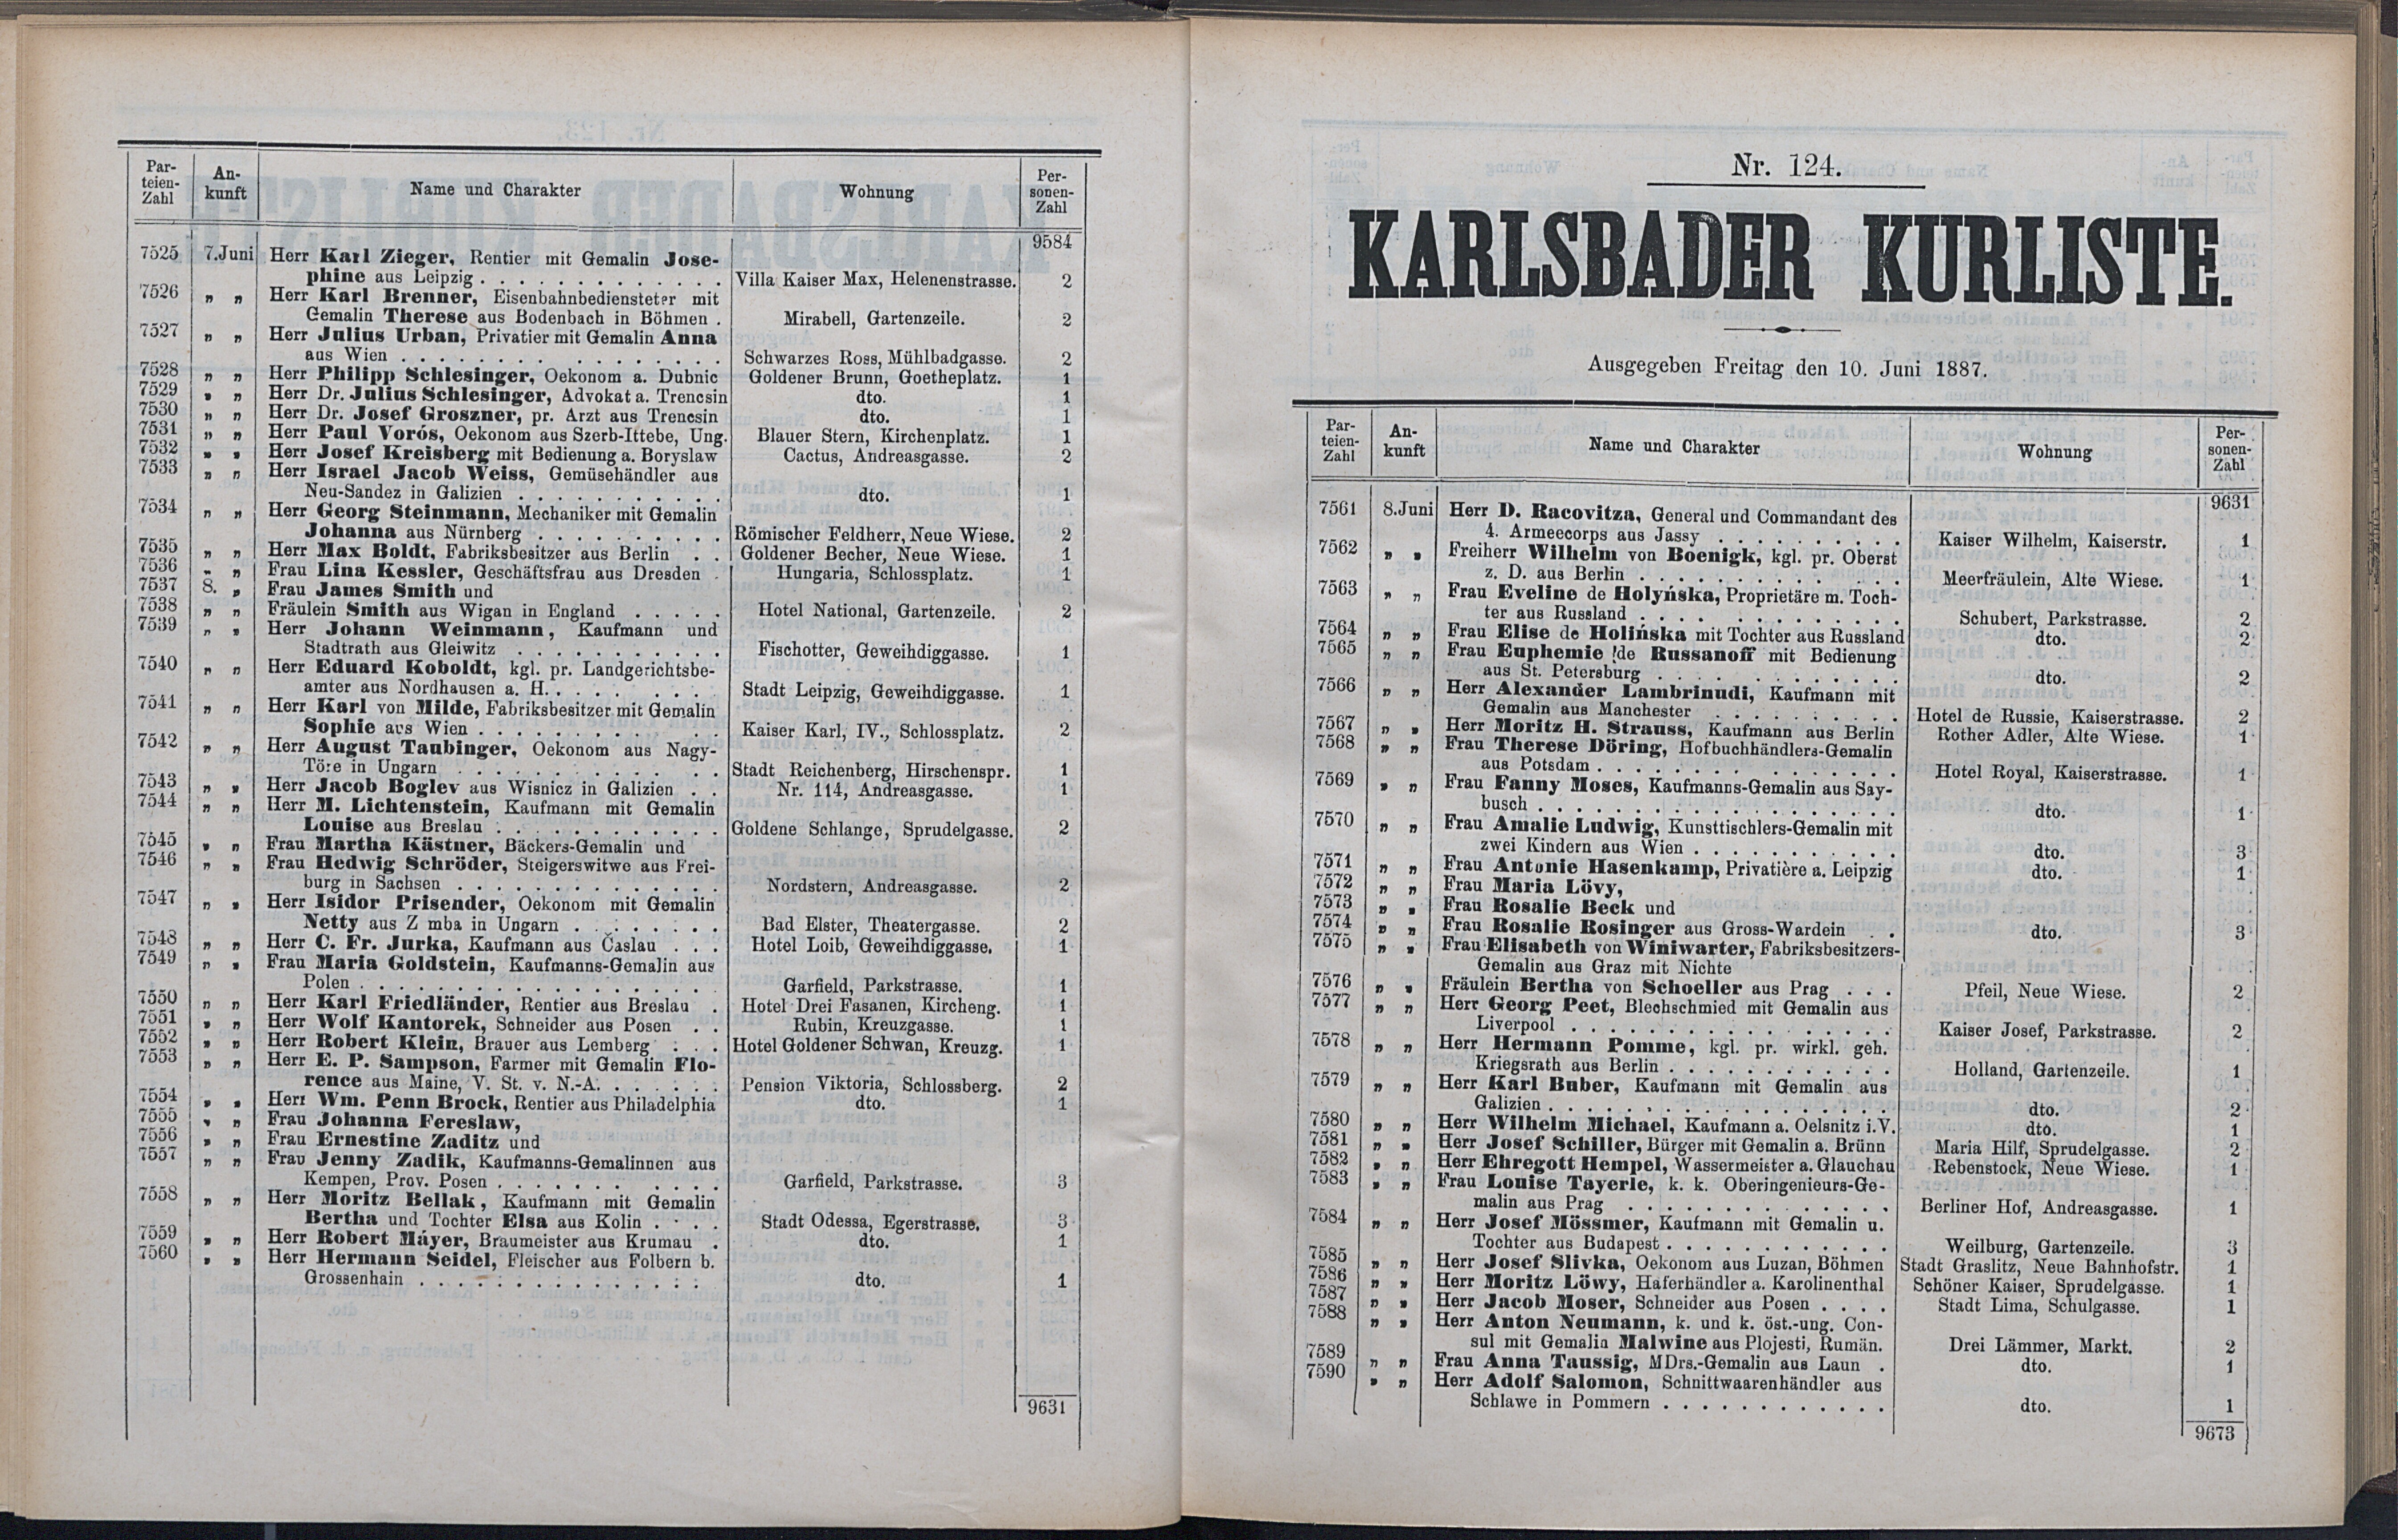 177. soap-kv_knihovna_karlsbader-kurliste-1887_1780